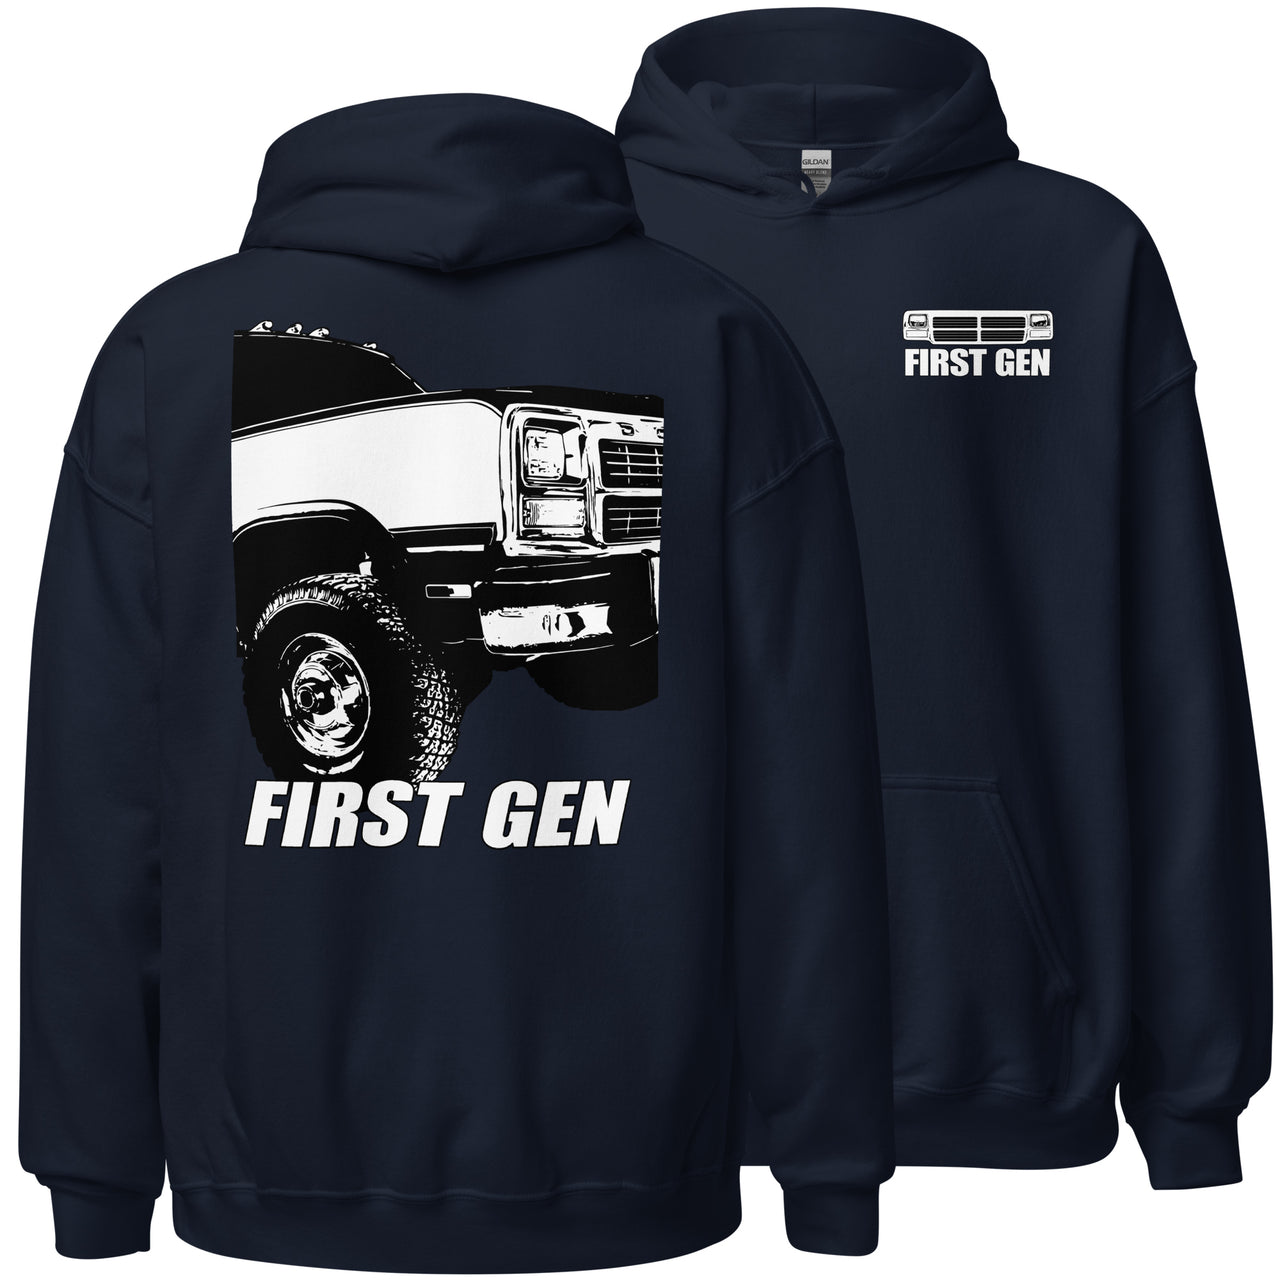 First Gen Truck Hoodie Sweatshirt With Close Up Design in navy